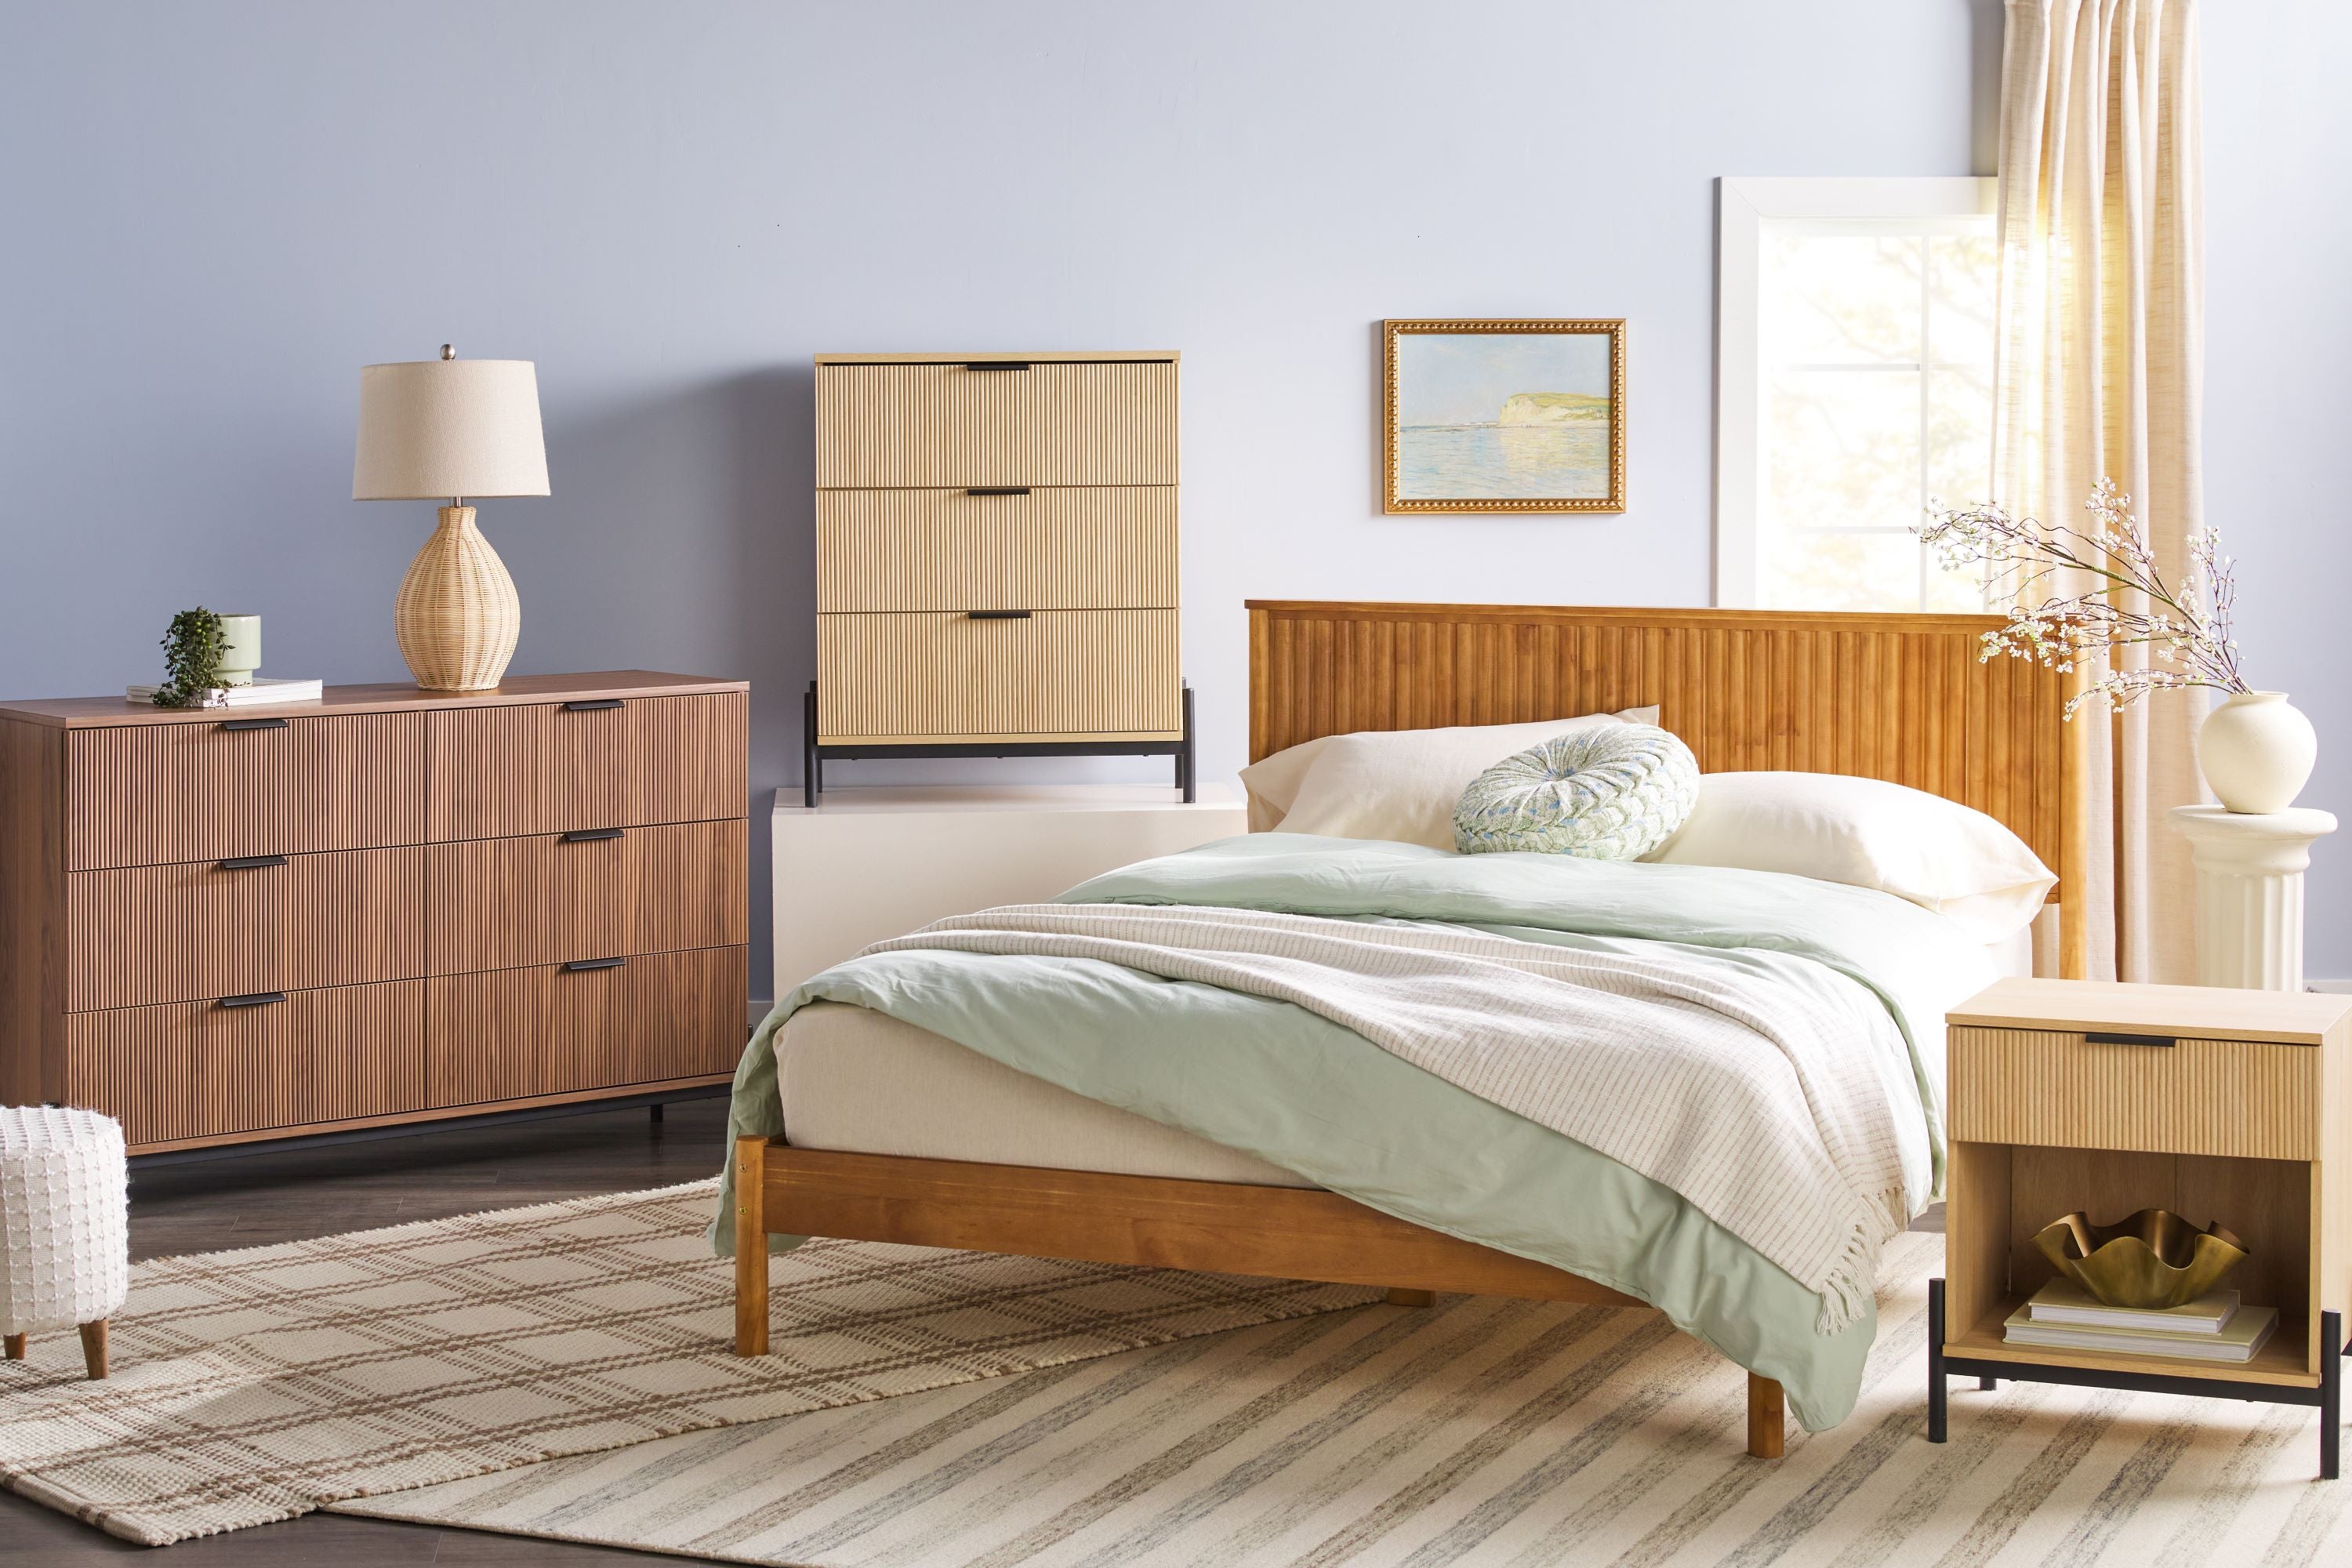 Affordable Furniture: New Arrivals and Trending Designs – Walker Edison